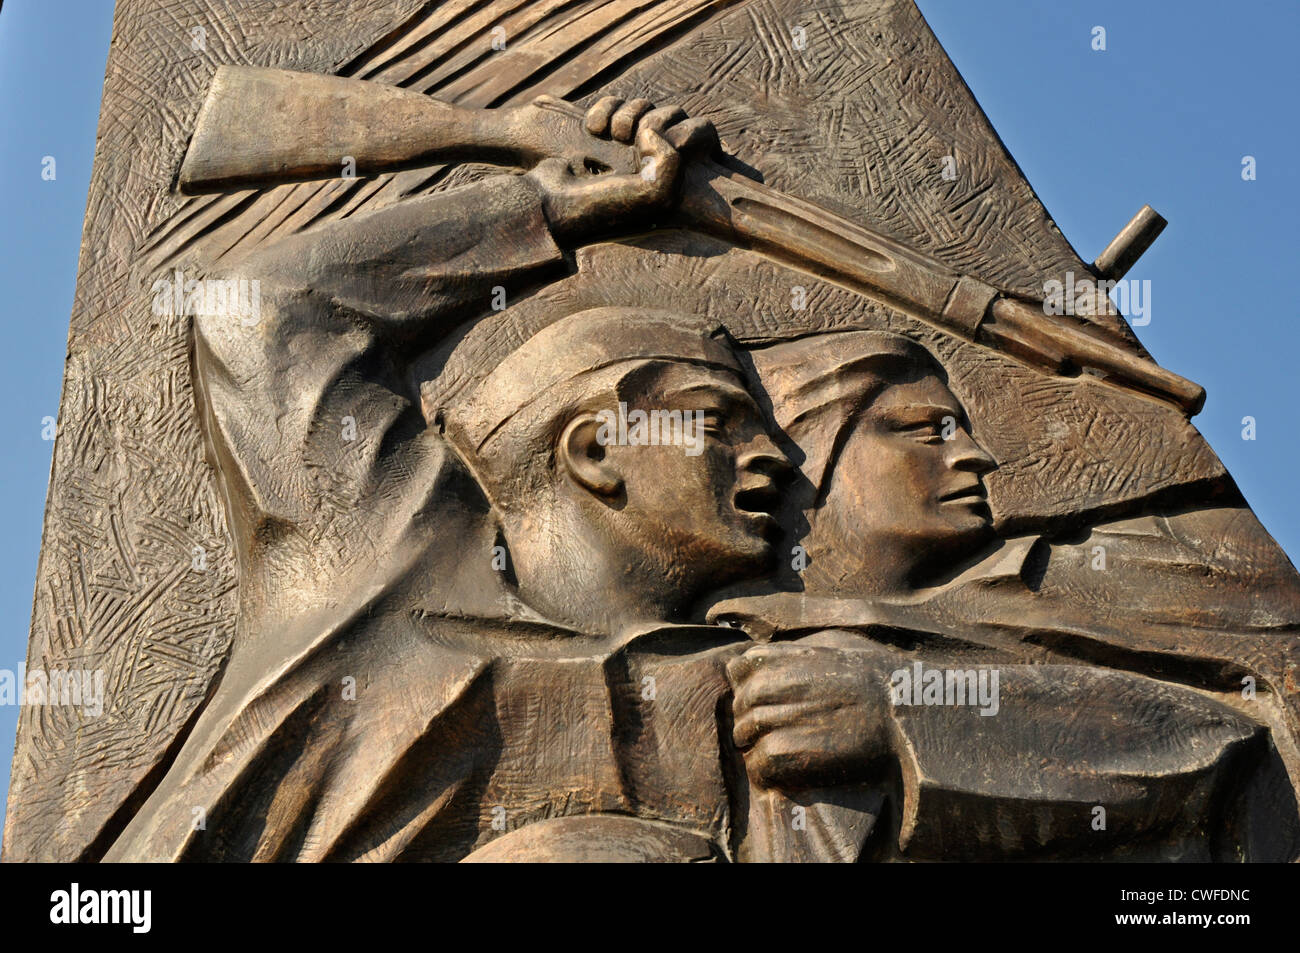 EUROPE, Macedonia, Bitola, statue representing the  National Liberation War of Macedonia, 1941-44, detail Stock Photo